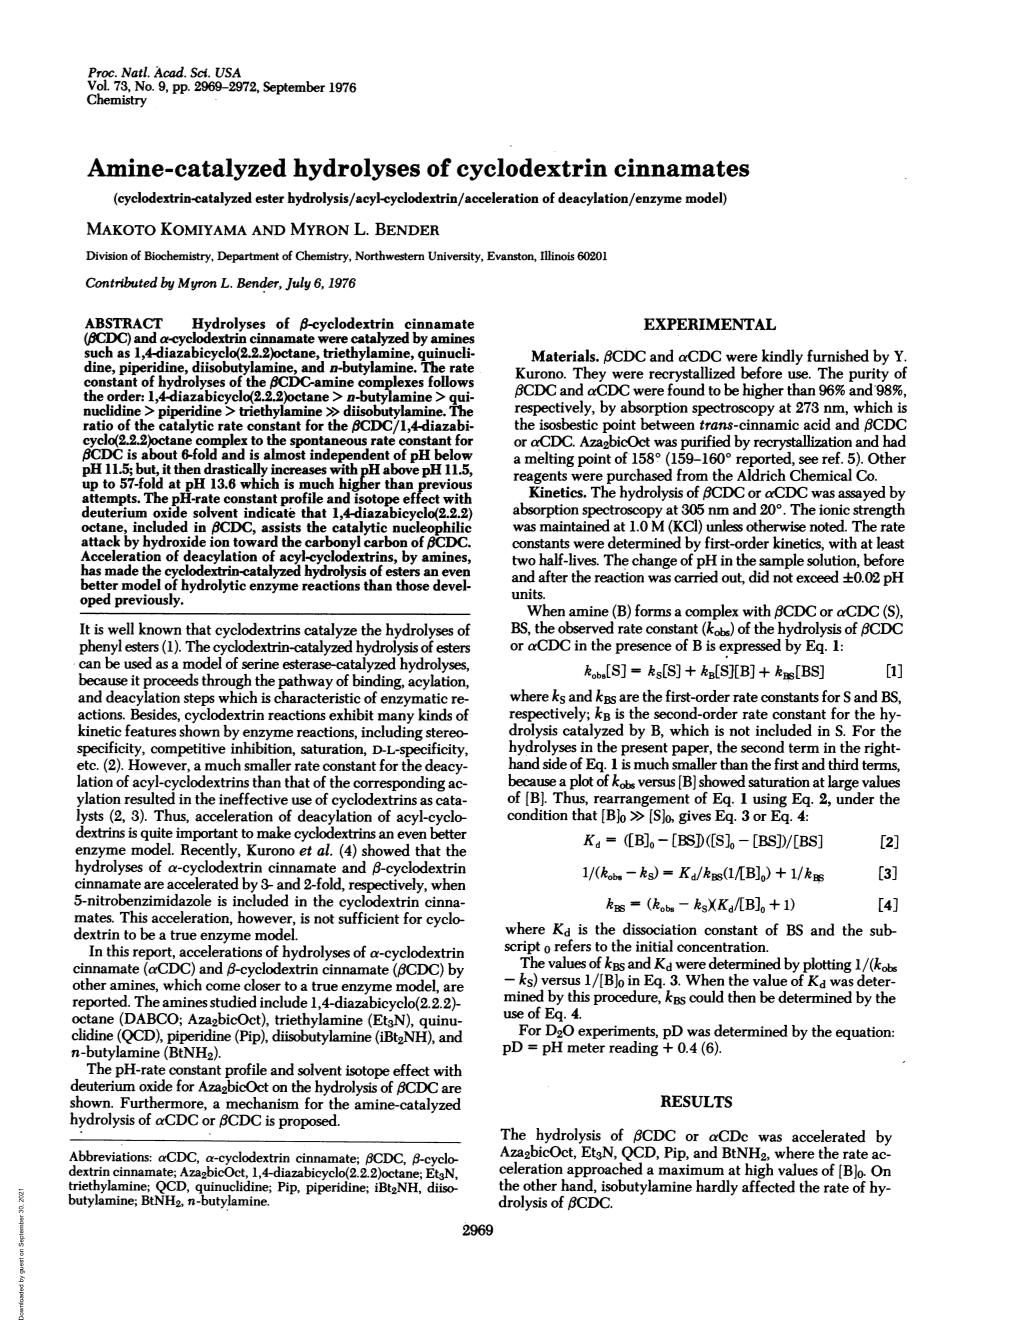 Amine-Catalyzed Hydrolyses of Cyclodextrin Cinnamates